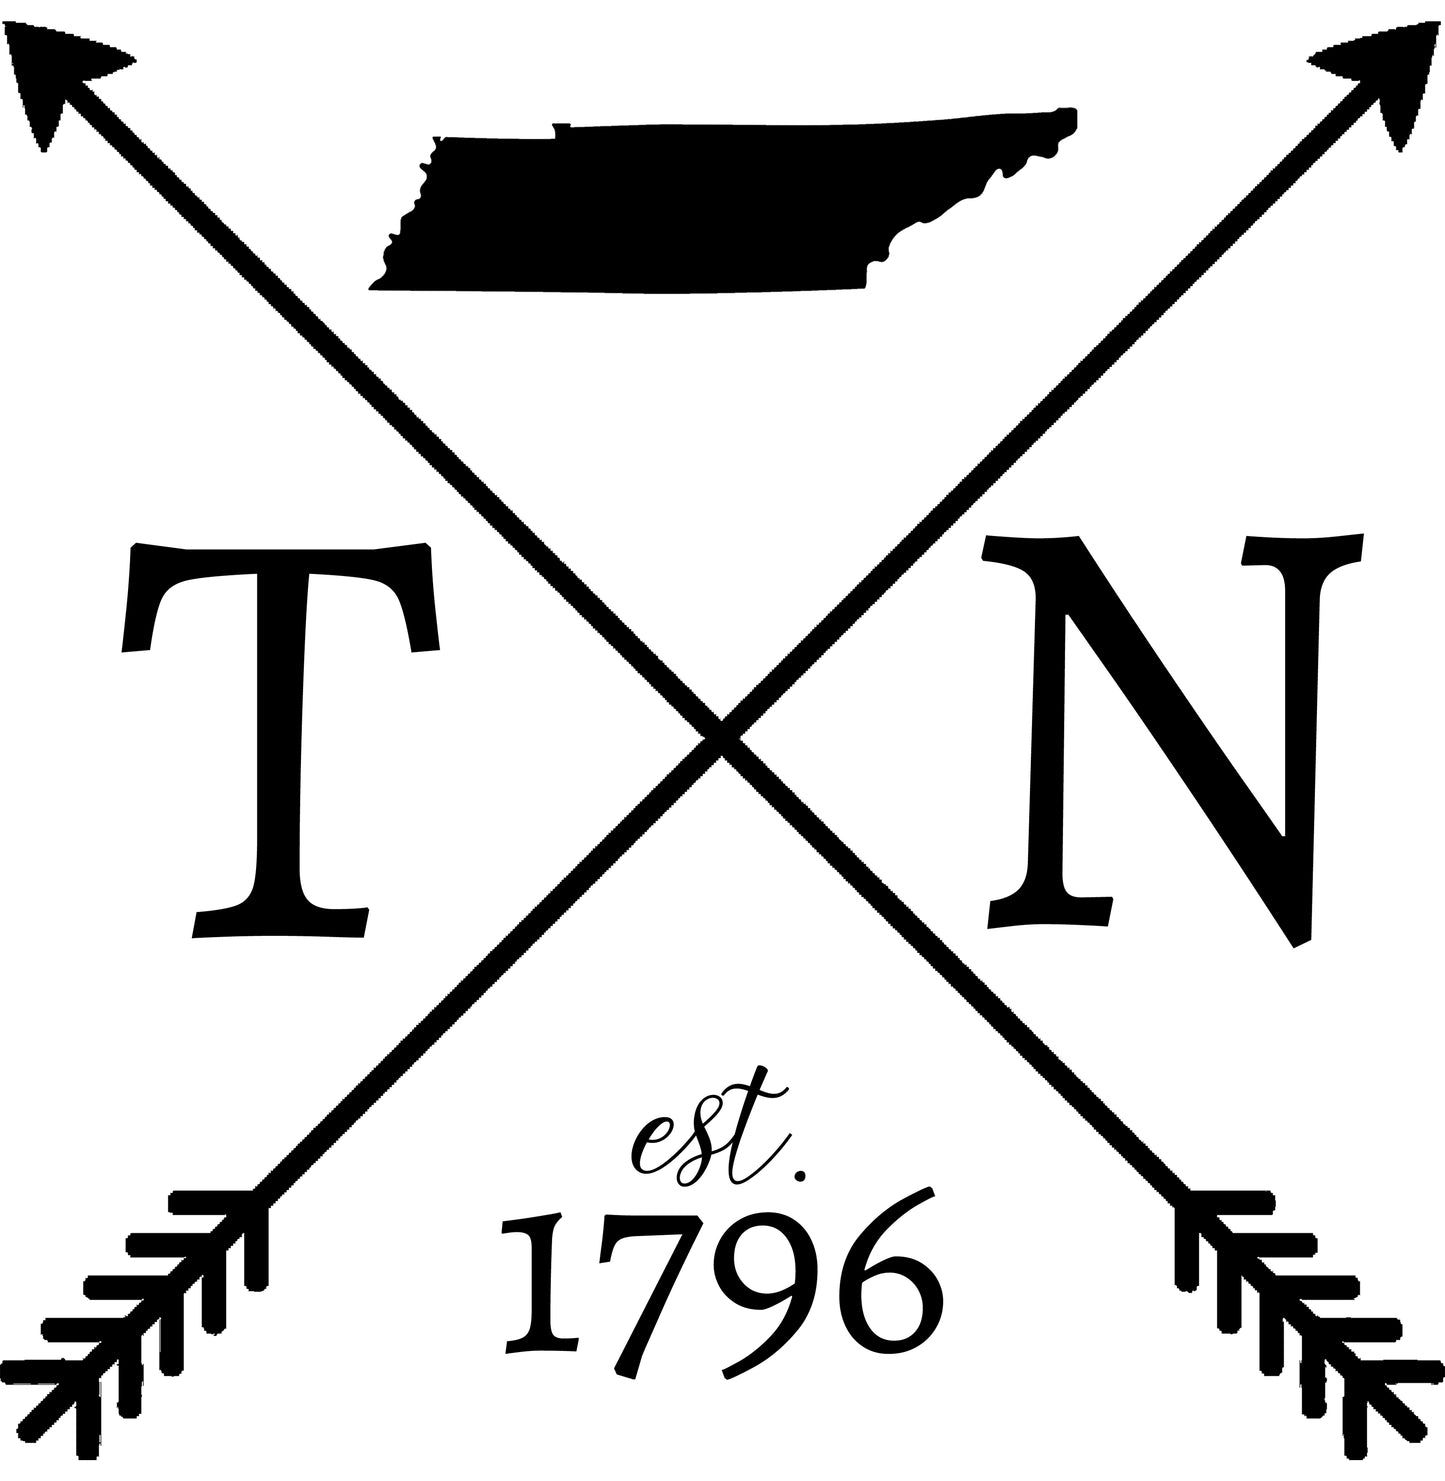 TN est. 1796